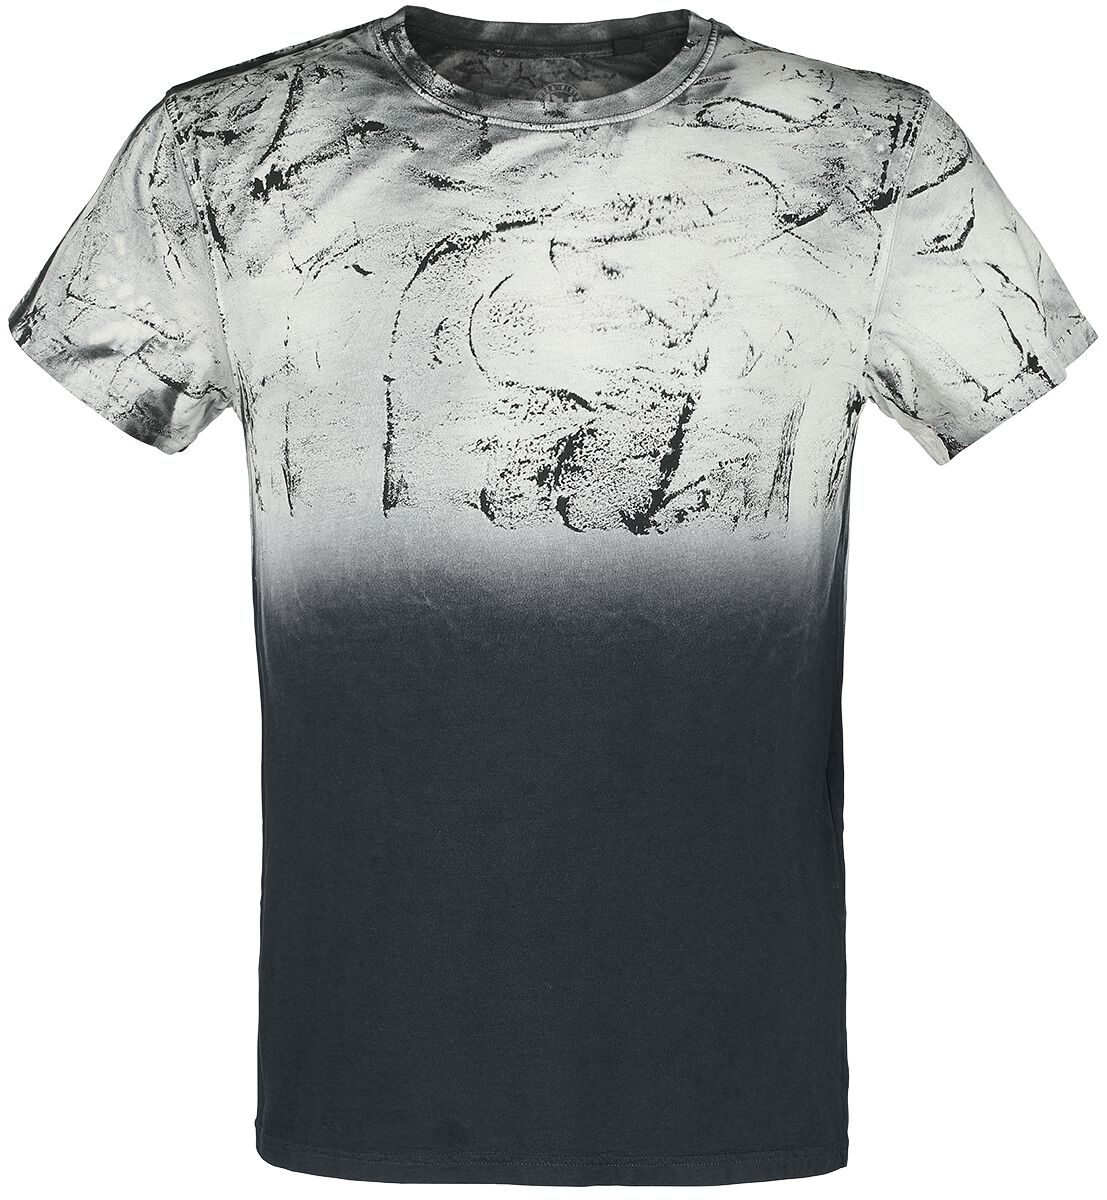 Outer Vision Man`s T-Shirt Spatolato T-Shirt schwarz grau in 3XL